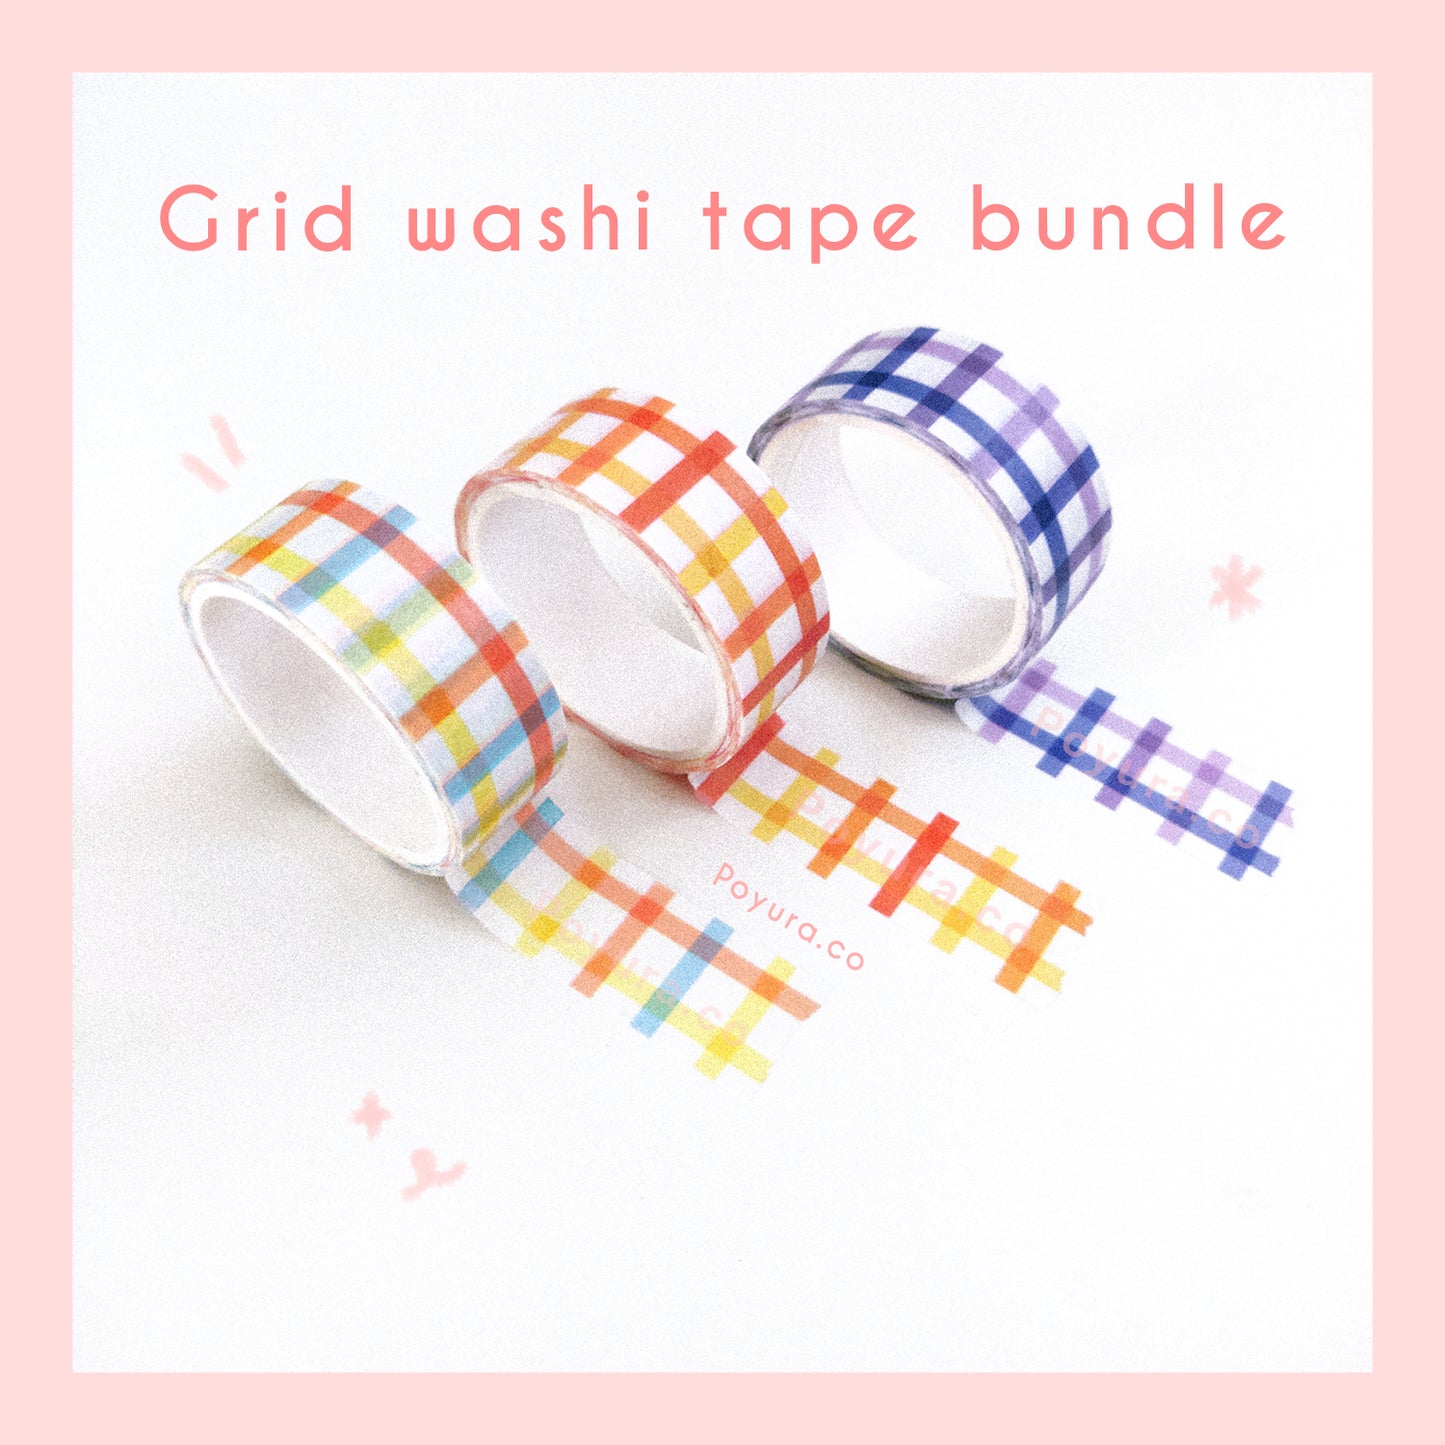 Grid washi tape bundle set